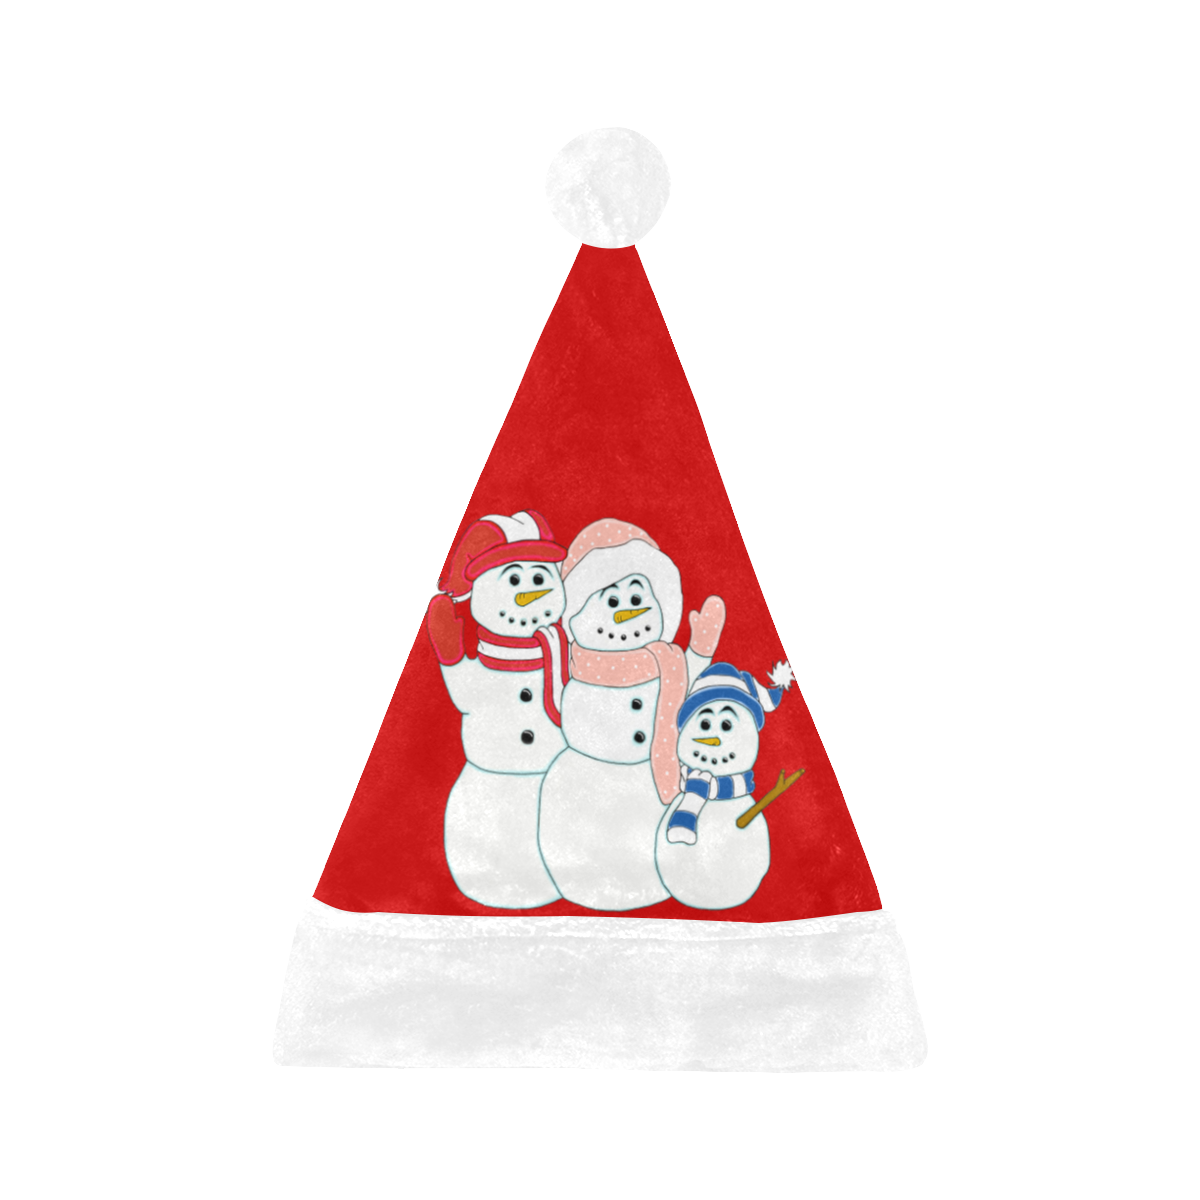 Snowman Family Red/White Santa Hat